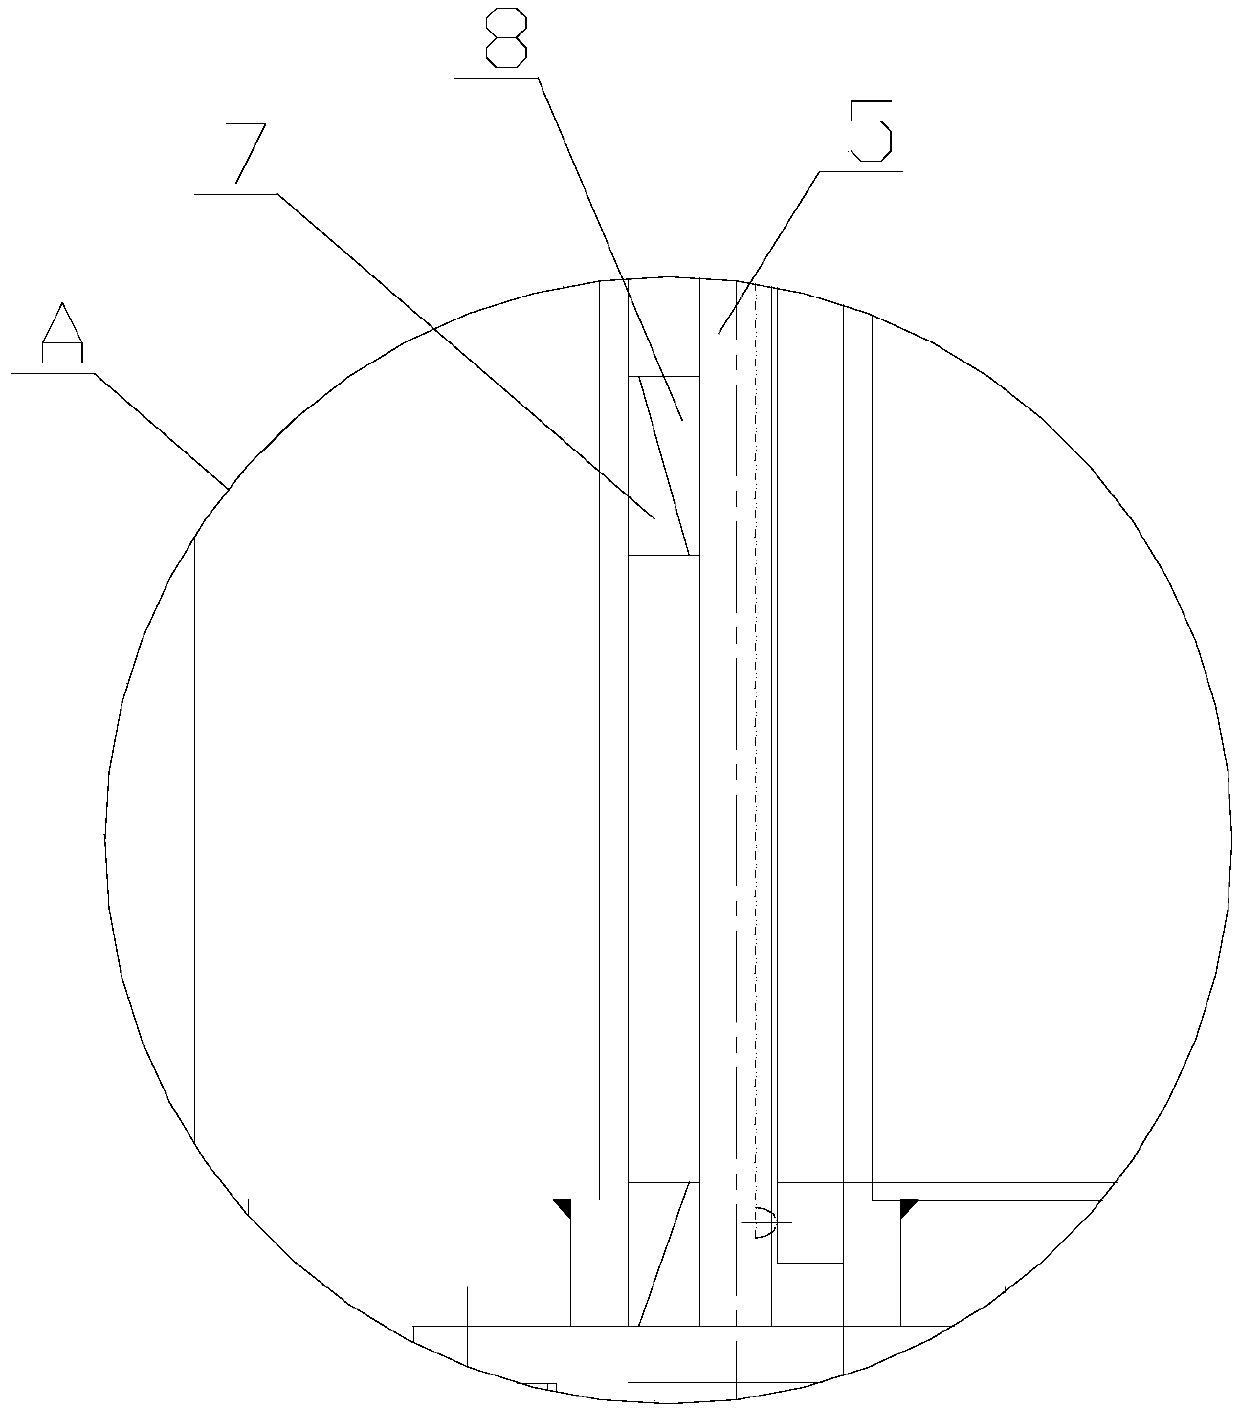 Electro-hydraulic air-lock gate valve